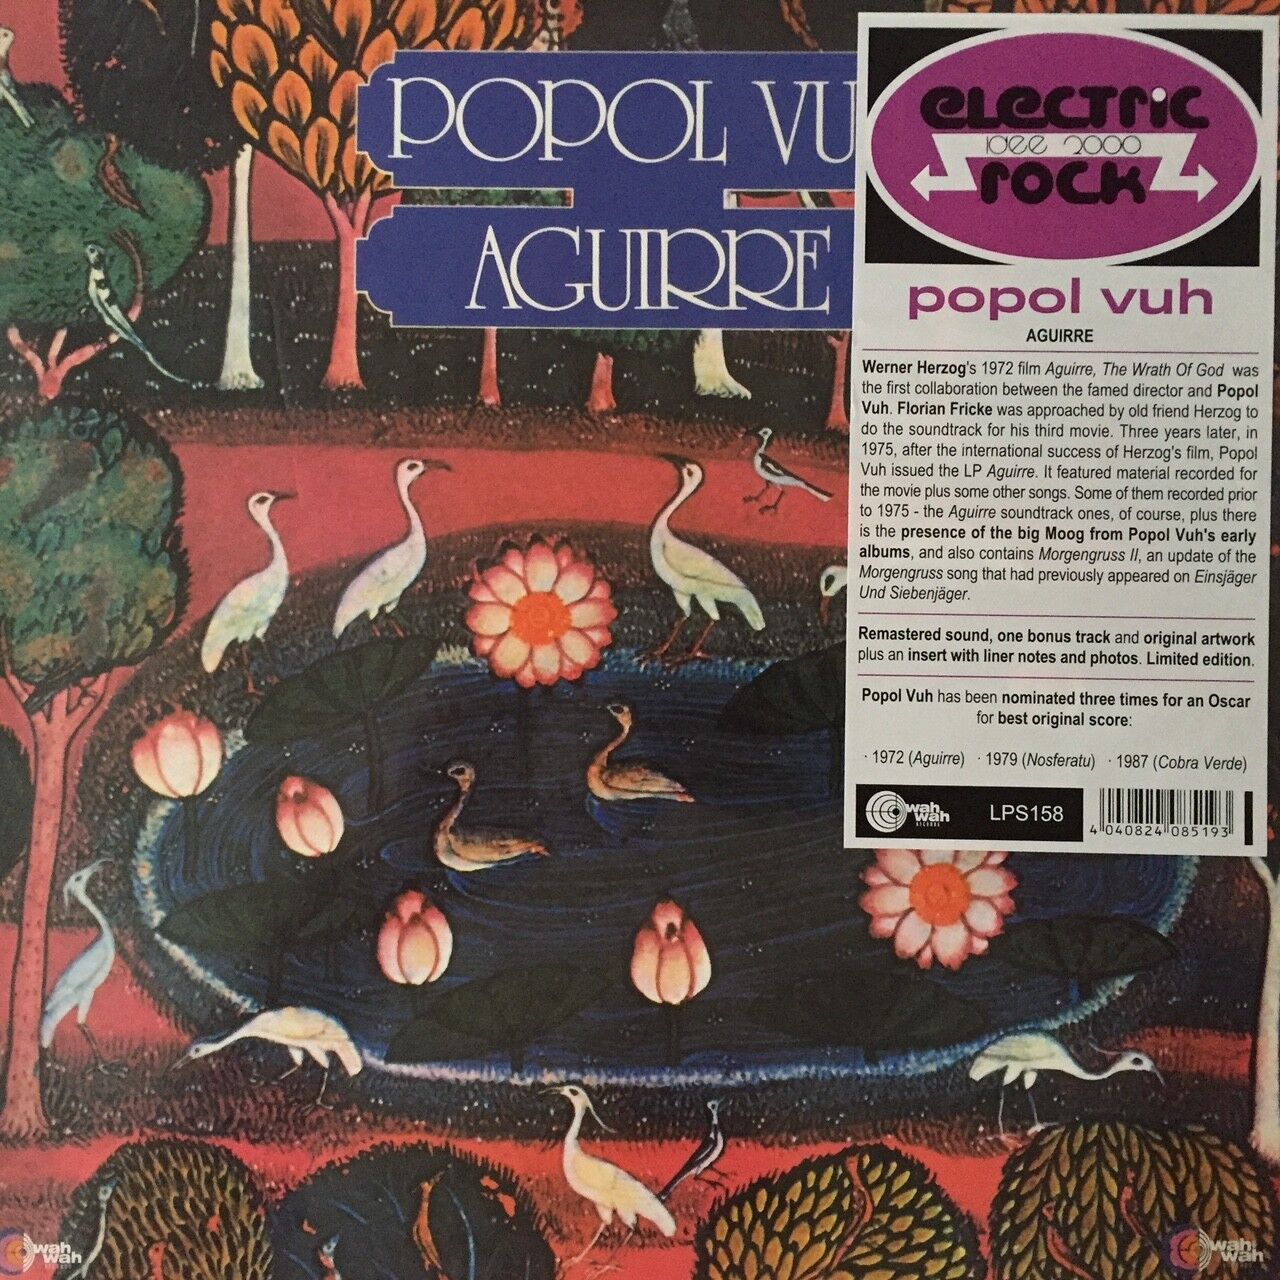 Popol Vuh - Aguirre(180g LTD. Vinyl LP), 2015 Wah Wah Ograniczona ilość, WYPRZEDAŻ